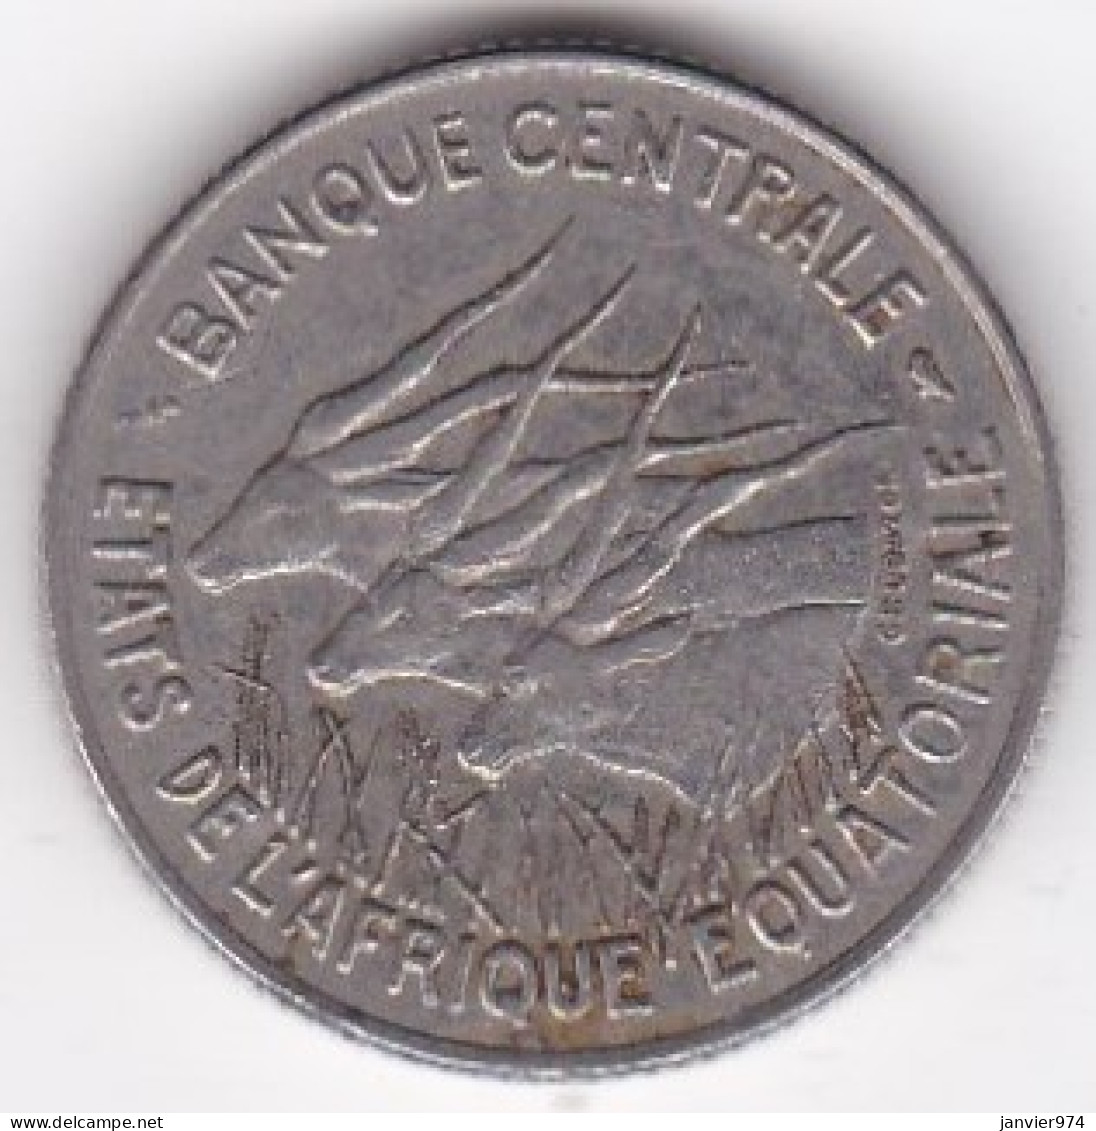 Etats De L'Afrique Equatoriale Banque Centrale. 100 Francs 1968 .en Nickel,  KM# 5 - Sonstige – Afrika